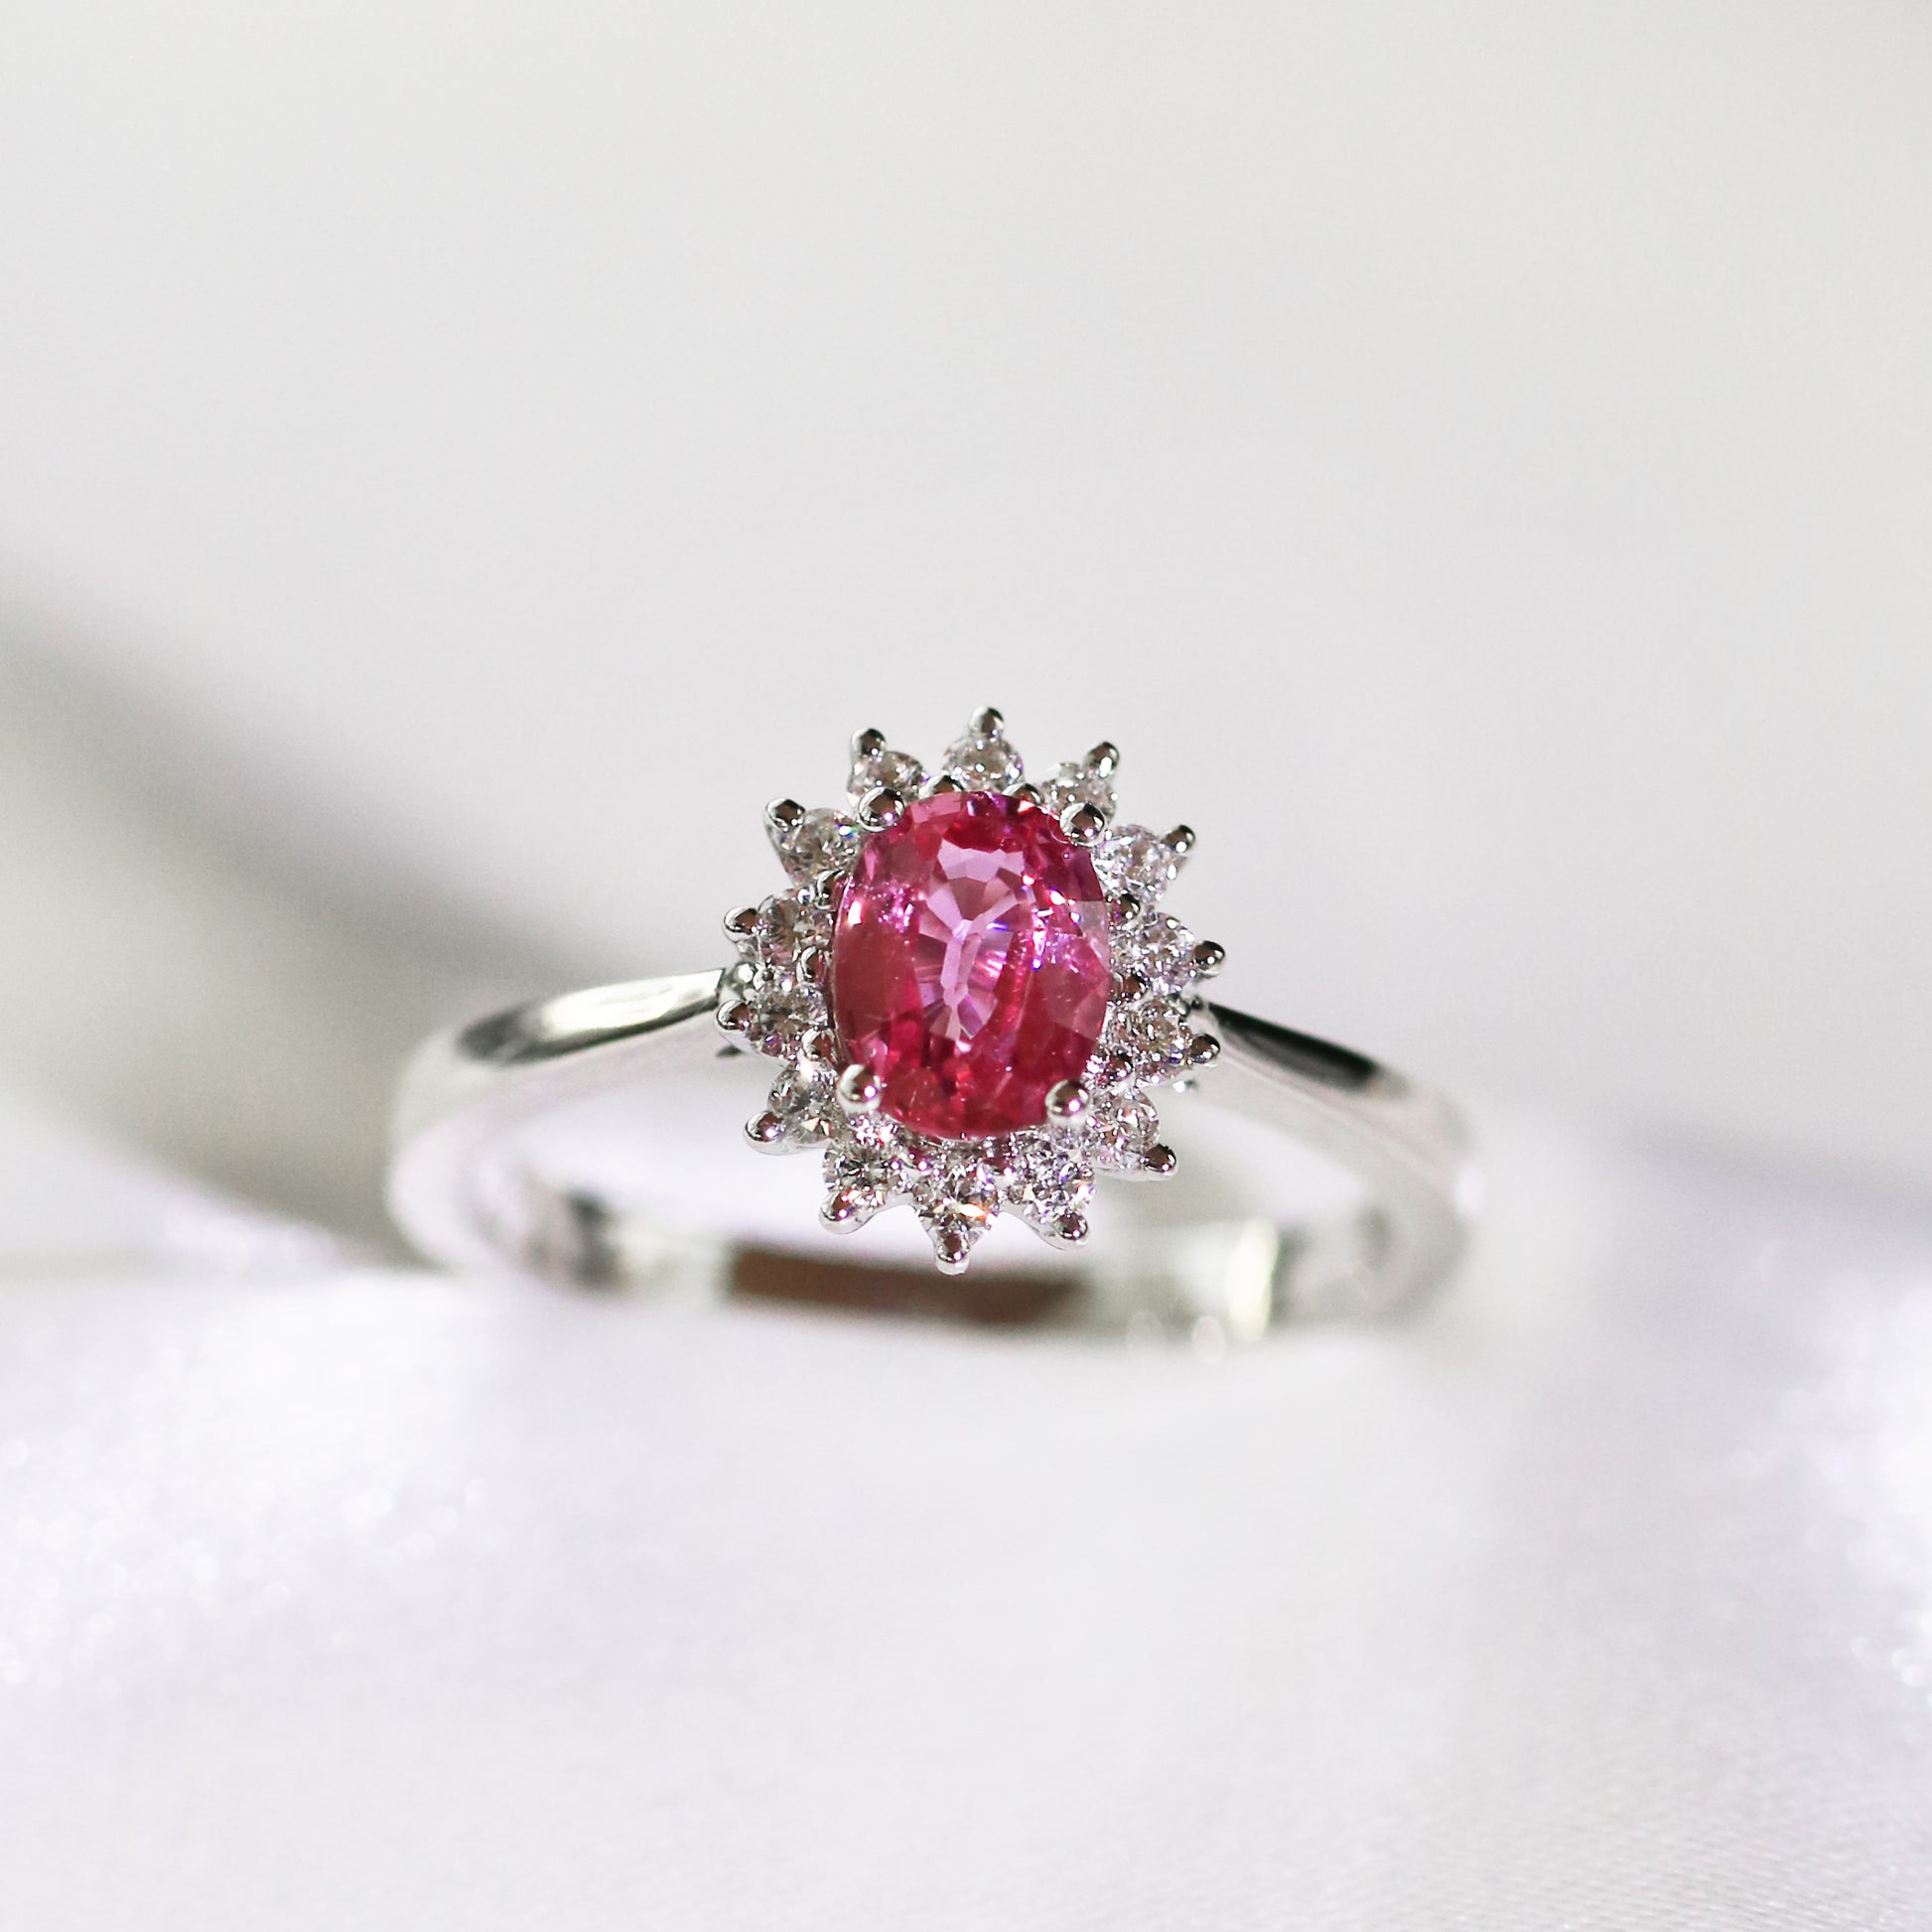  18k白金粉紅藍寶石戒指側面18k White Gold Pink Sapphire Ring on side view